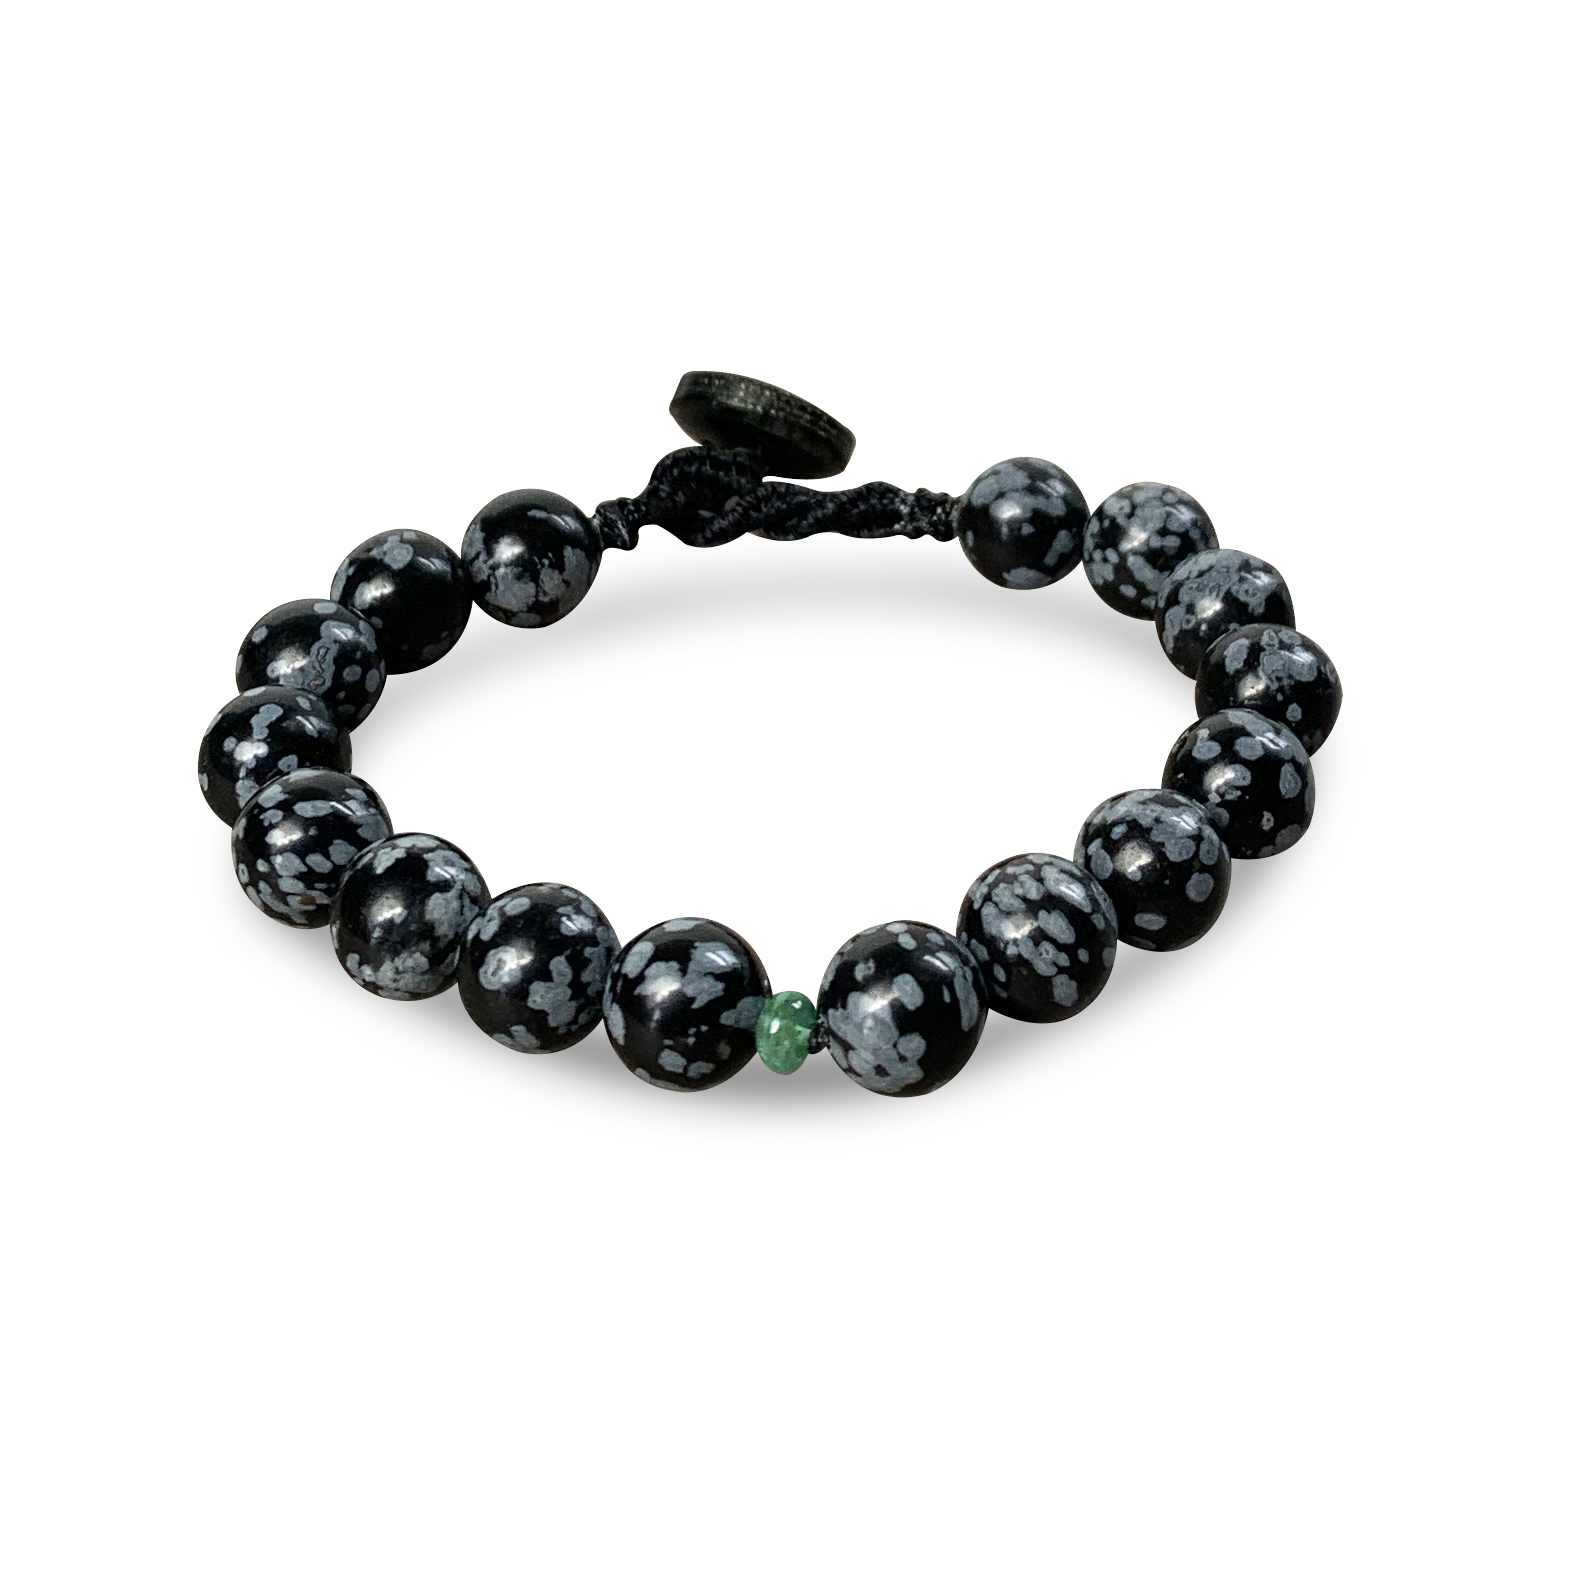 The New Design of Black Obsidian Piyao bracelet (Big Pi-yao), (Big  moneyball), (Big Obsidian stone) - YouTube